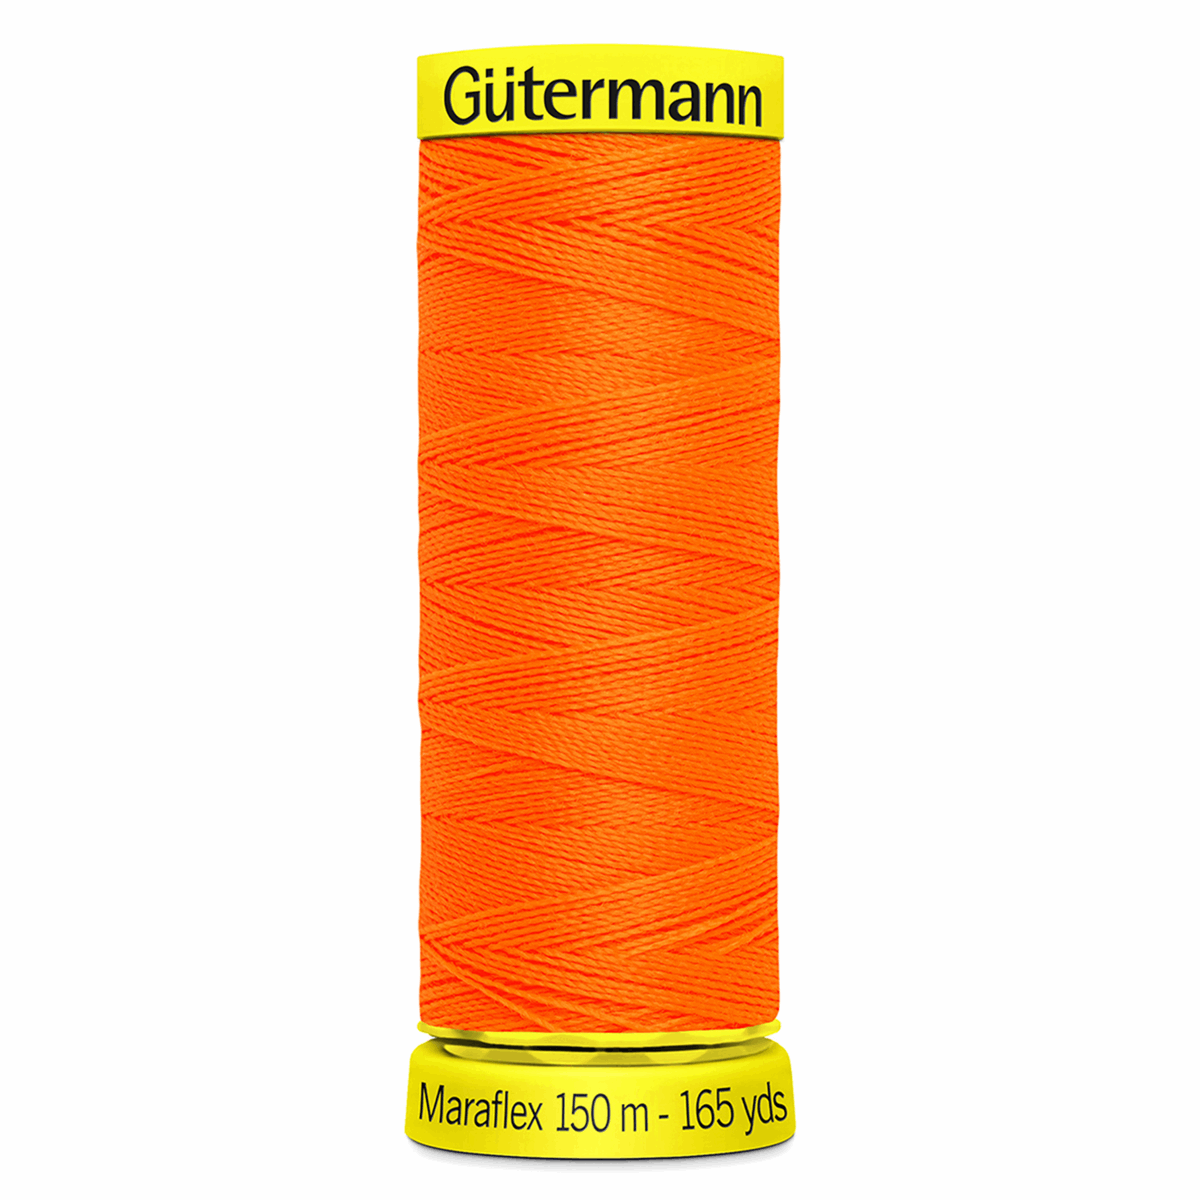 Gutermann Maraflex Elastic Sewing Thread 150m Neon Orange 3871